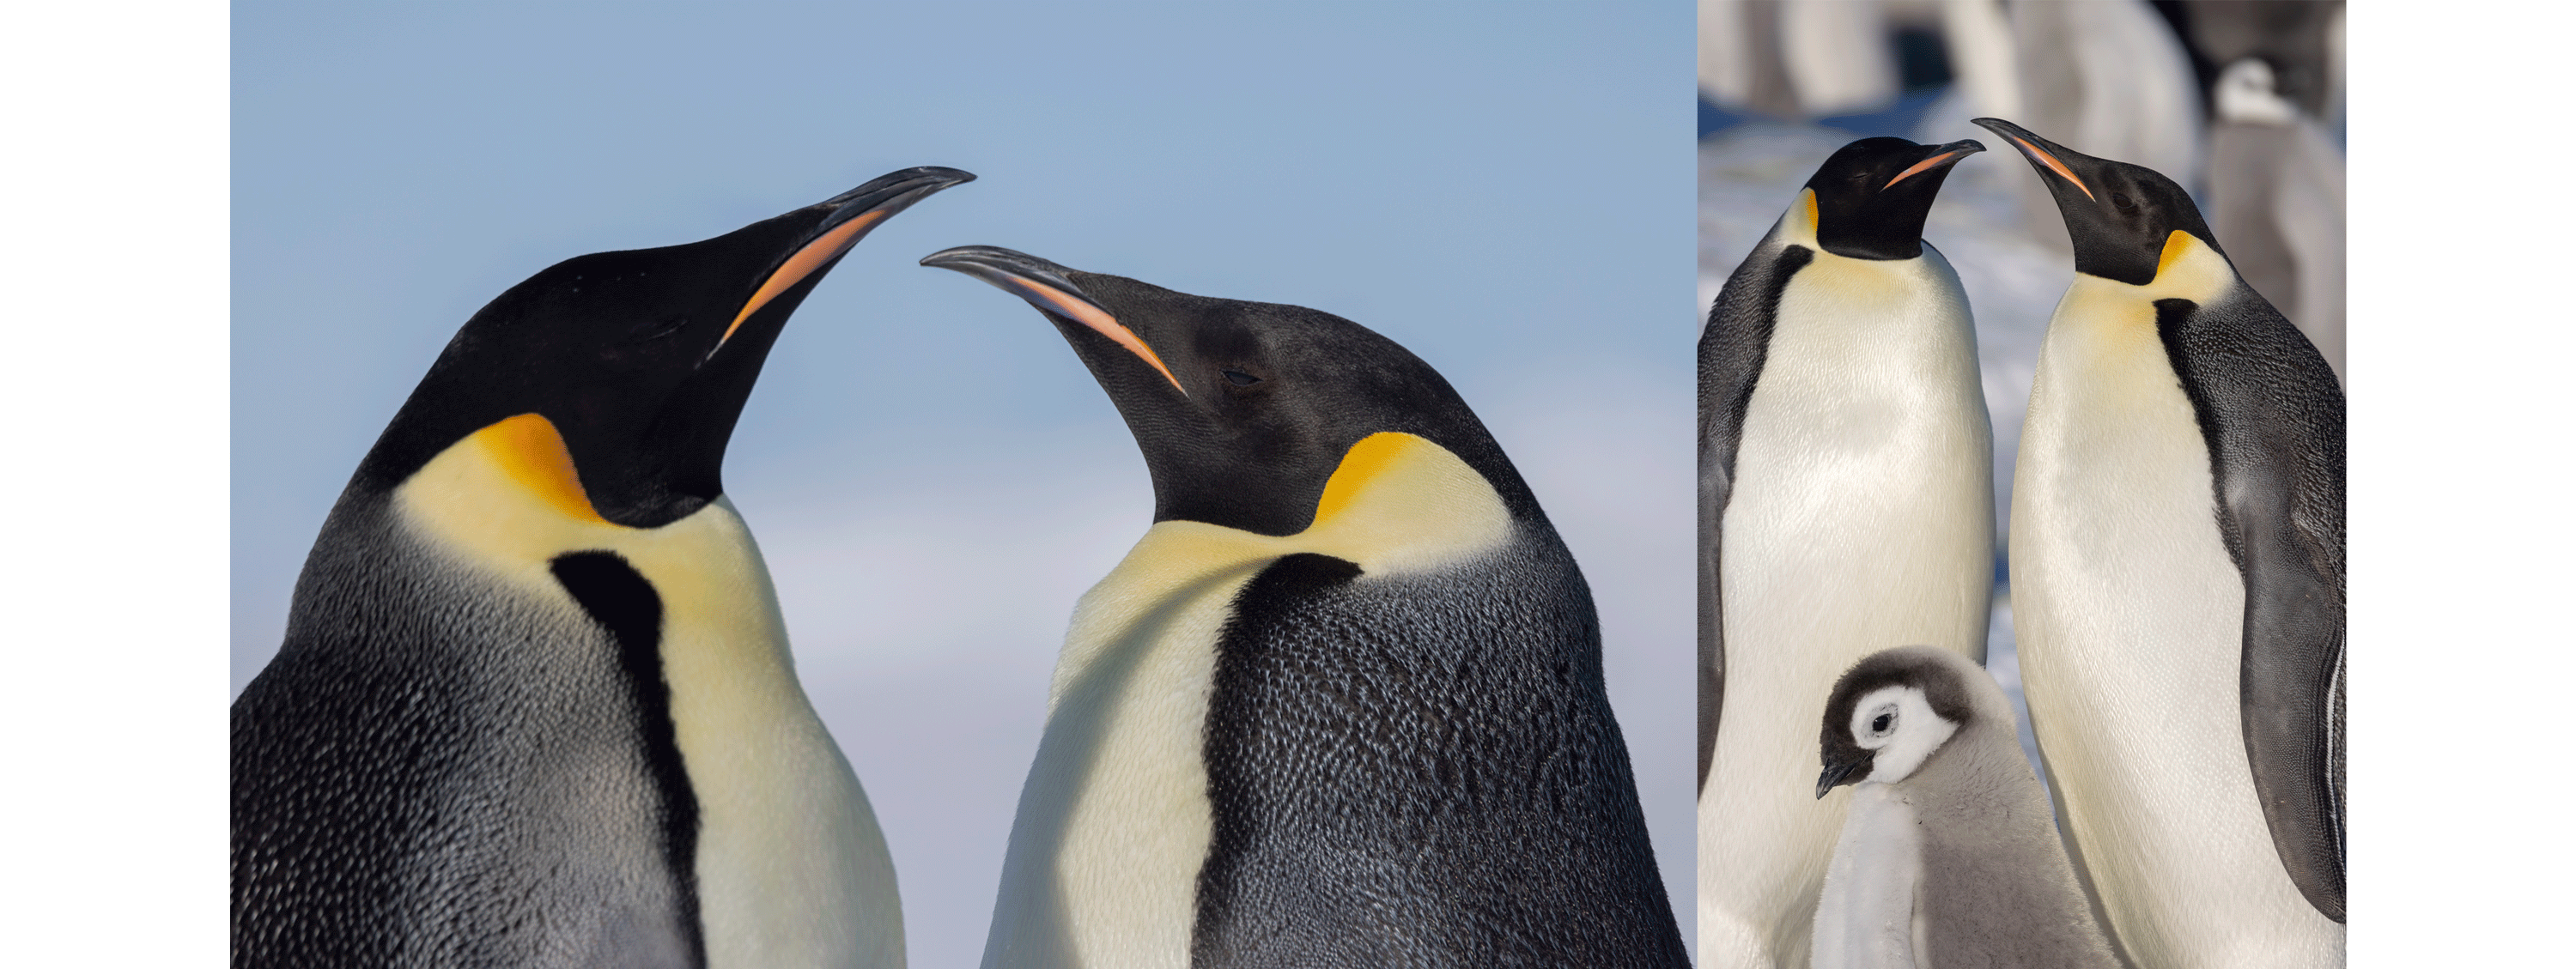 Emperor penguin family at Gould Bay colony in the Weddell Sea, Antarctica. November 2021 